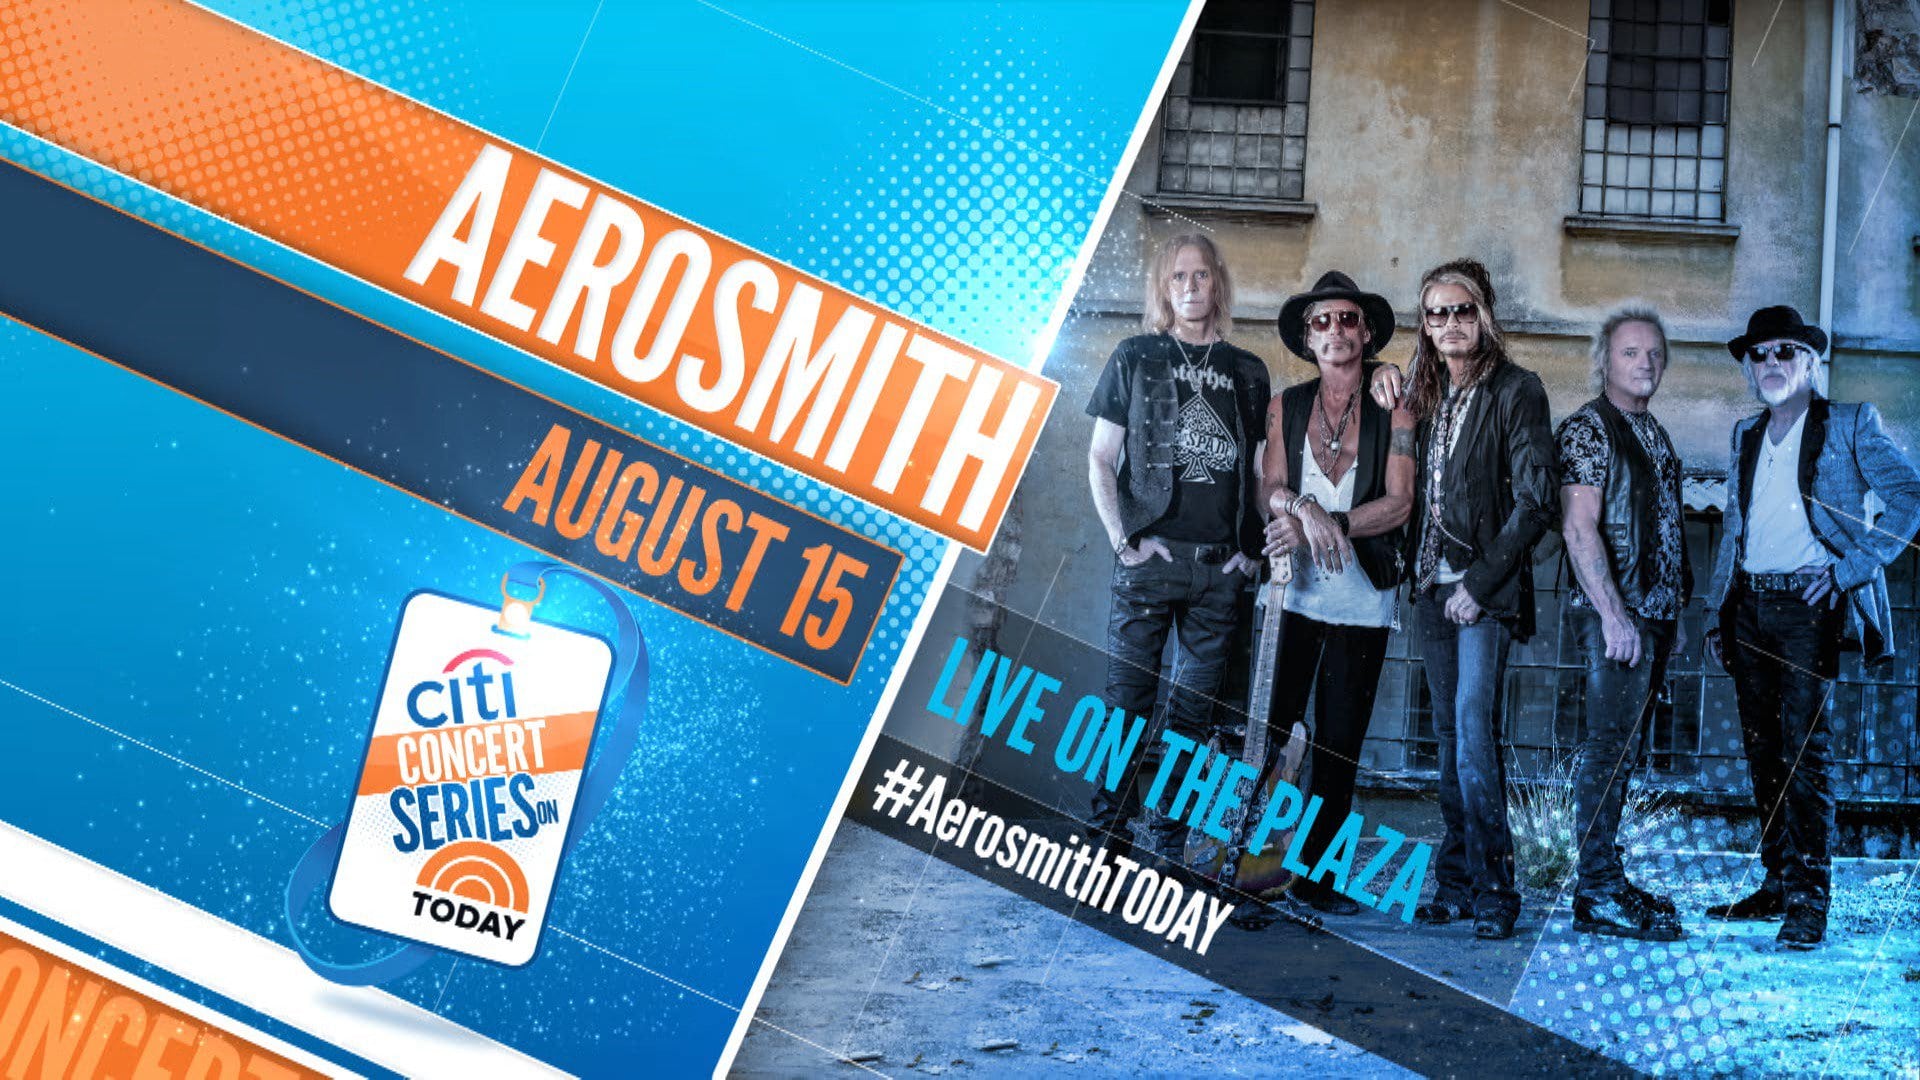 Citi Concert Series: Aerosmith at TODAY Plaza on 08-15-18